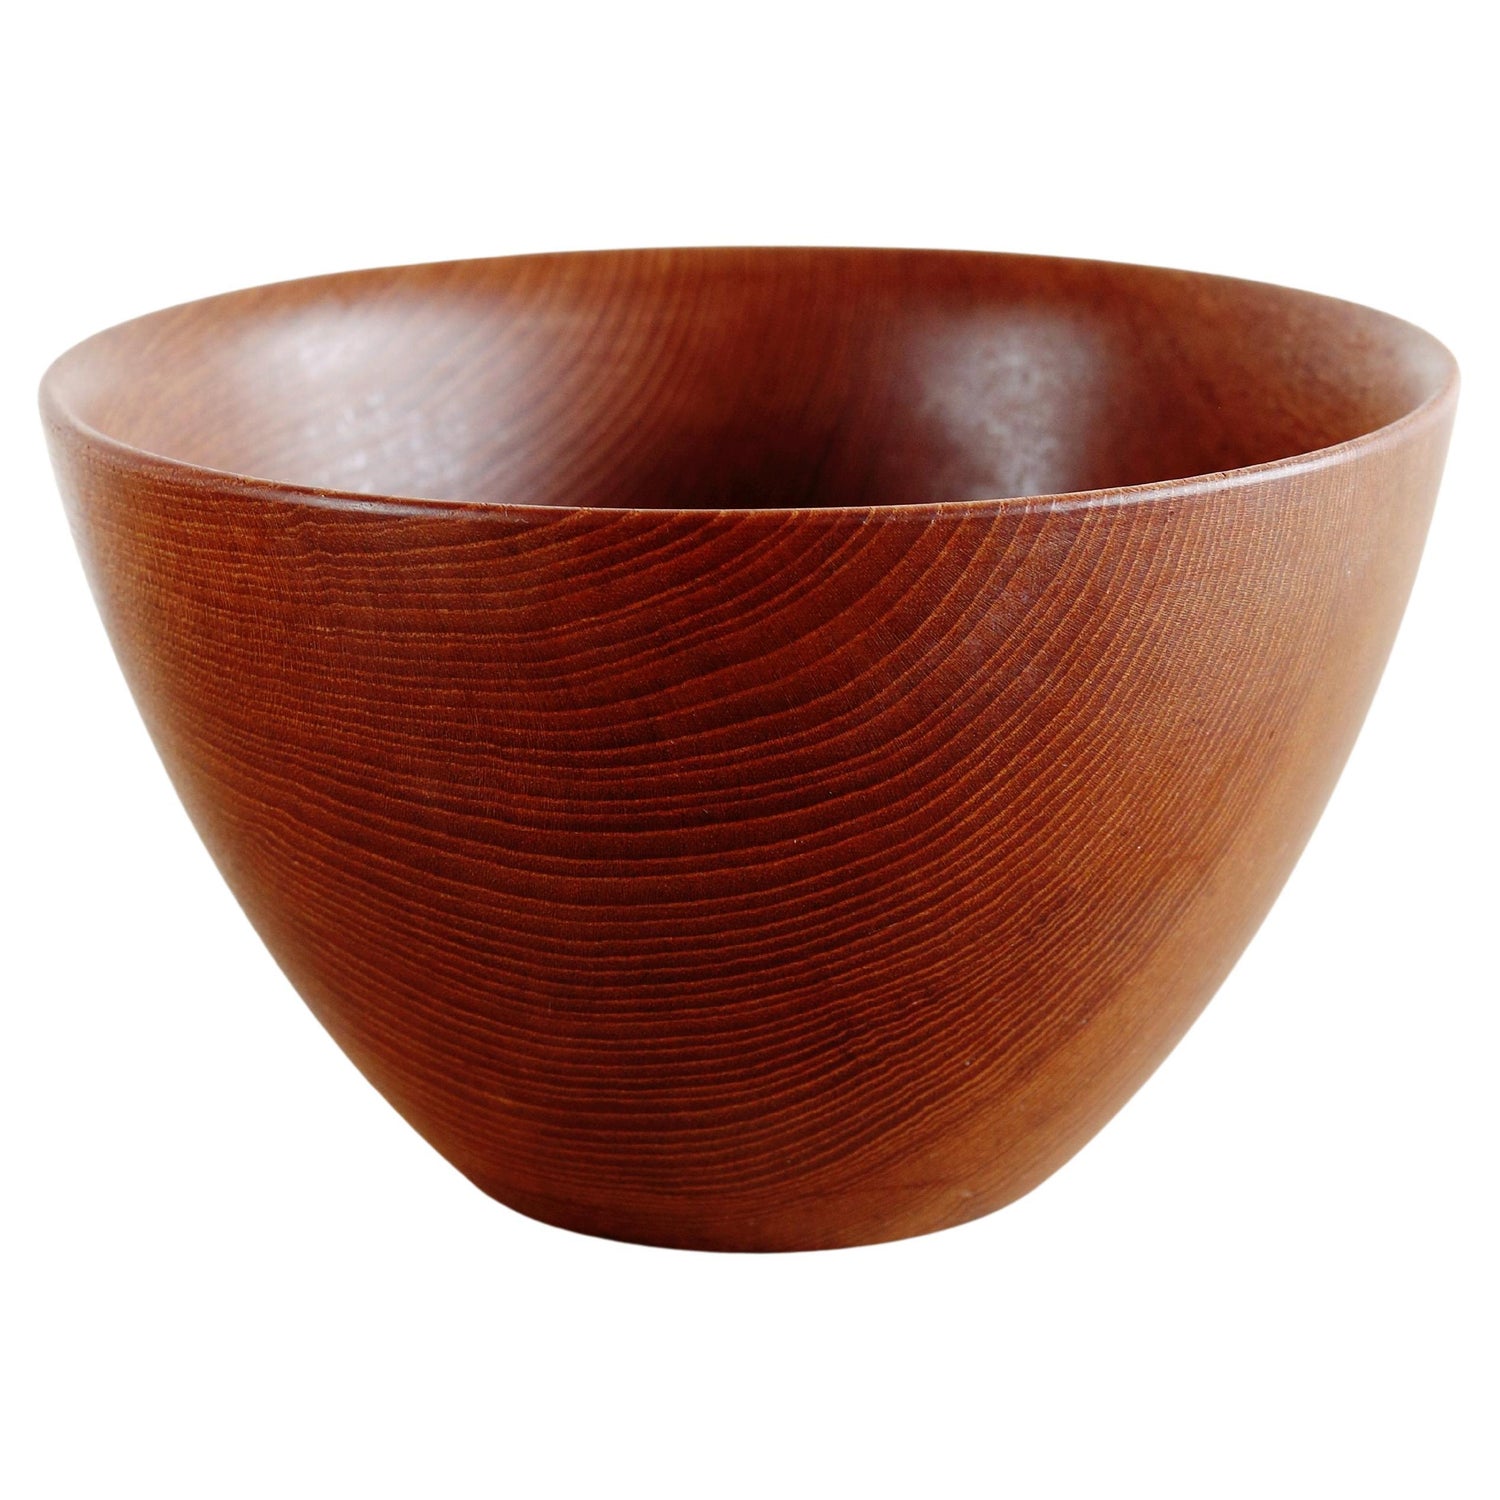 https://a.1stdibscdn.com/mid-century-teak-bowl-by-galatix-for-sale/f_73302/f_359630221693497580242/f_35963022_1693497581431_bg_processed.jpg?width=1500